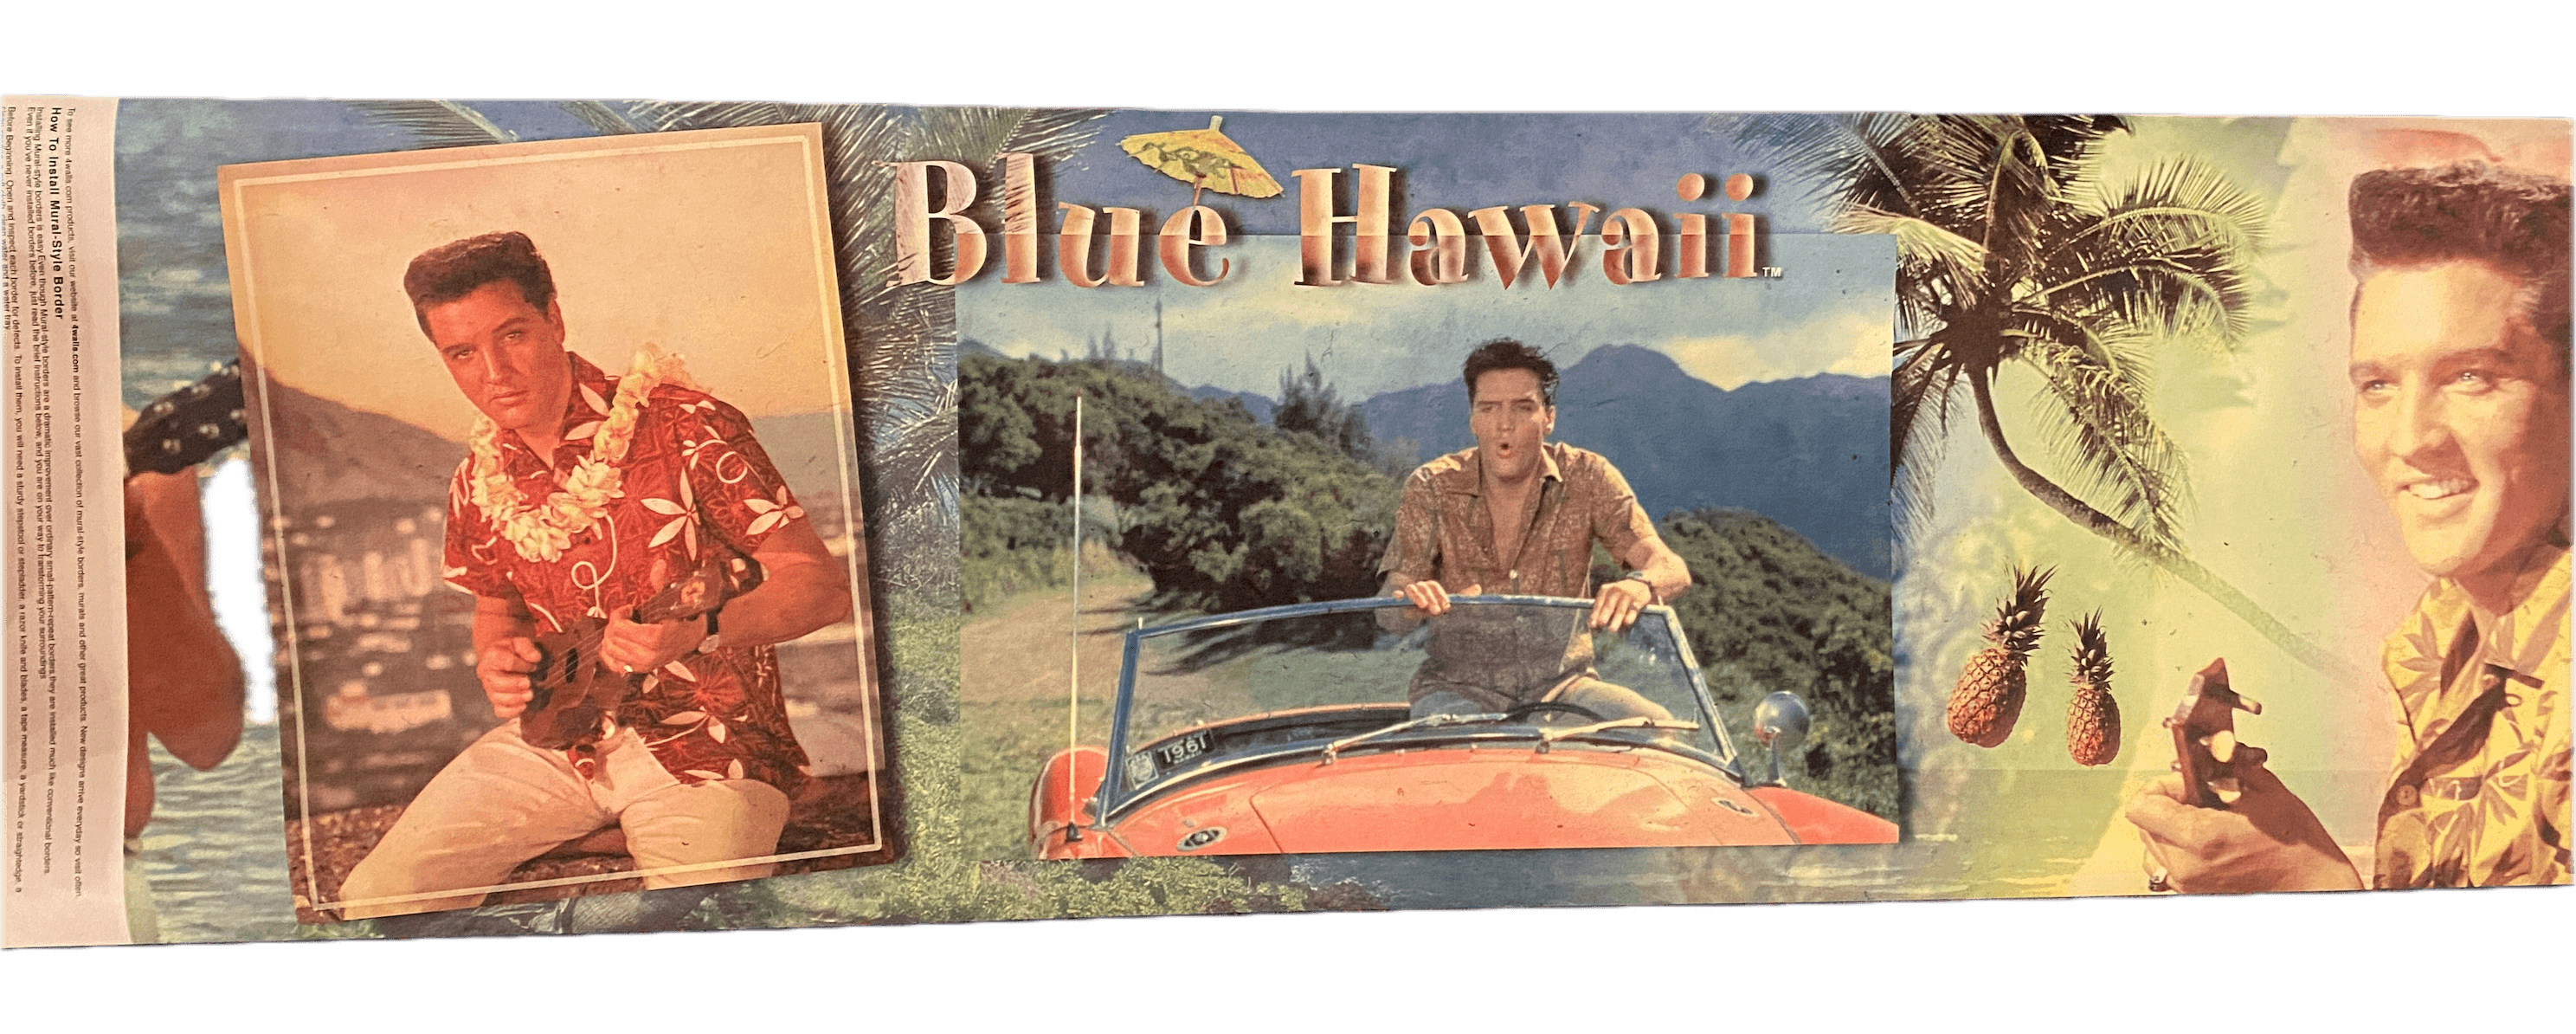 elvis banner blue hawaii 1